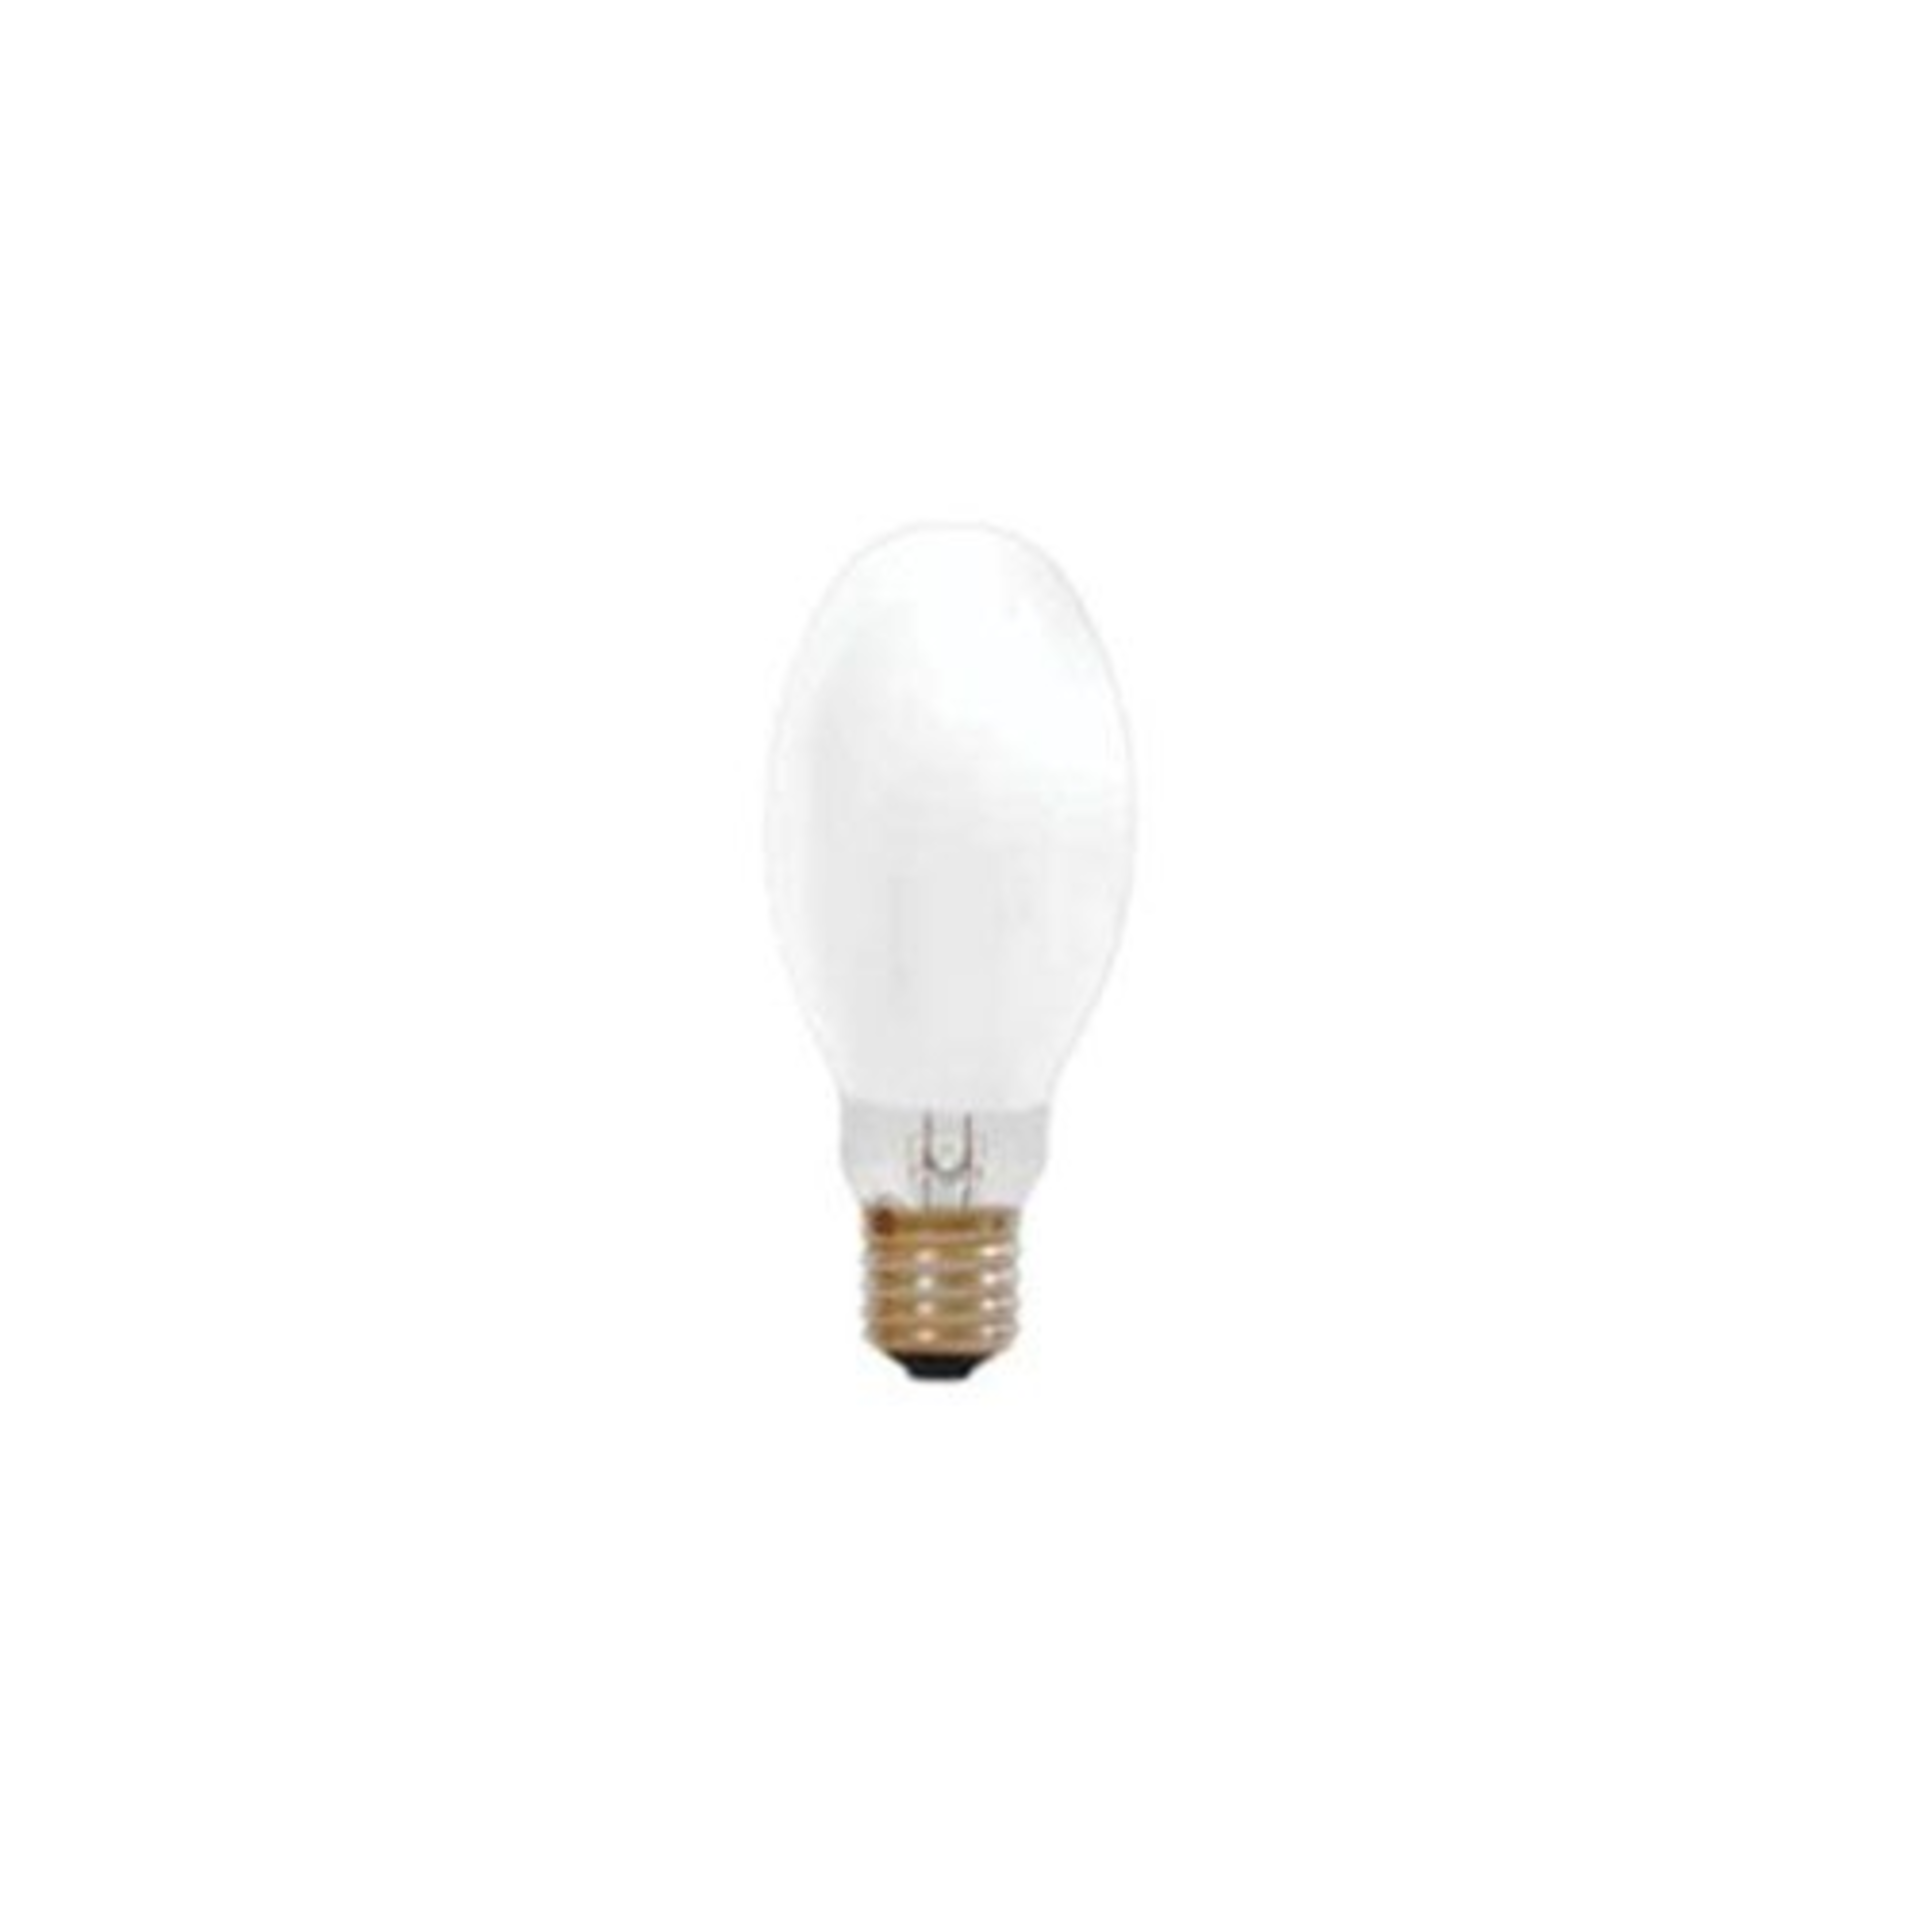 6x Sylvania M400/C/U/ED37 Miniature and Specialty Bulbs Metal Halide 400W